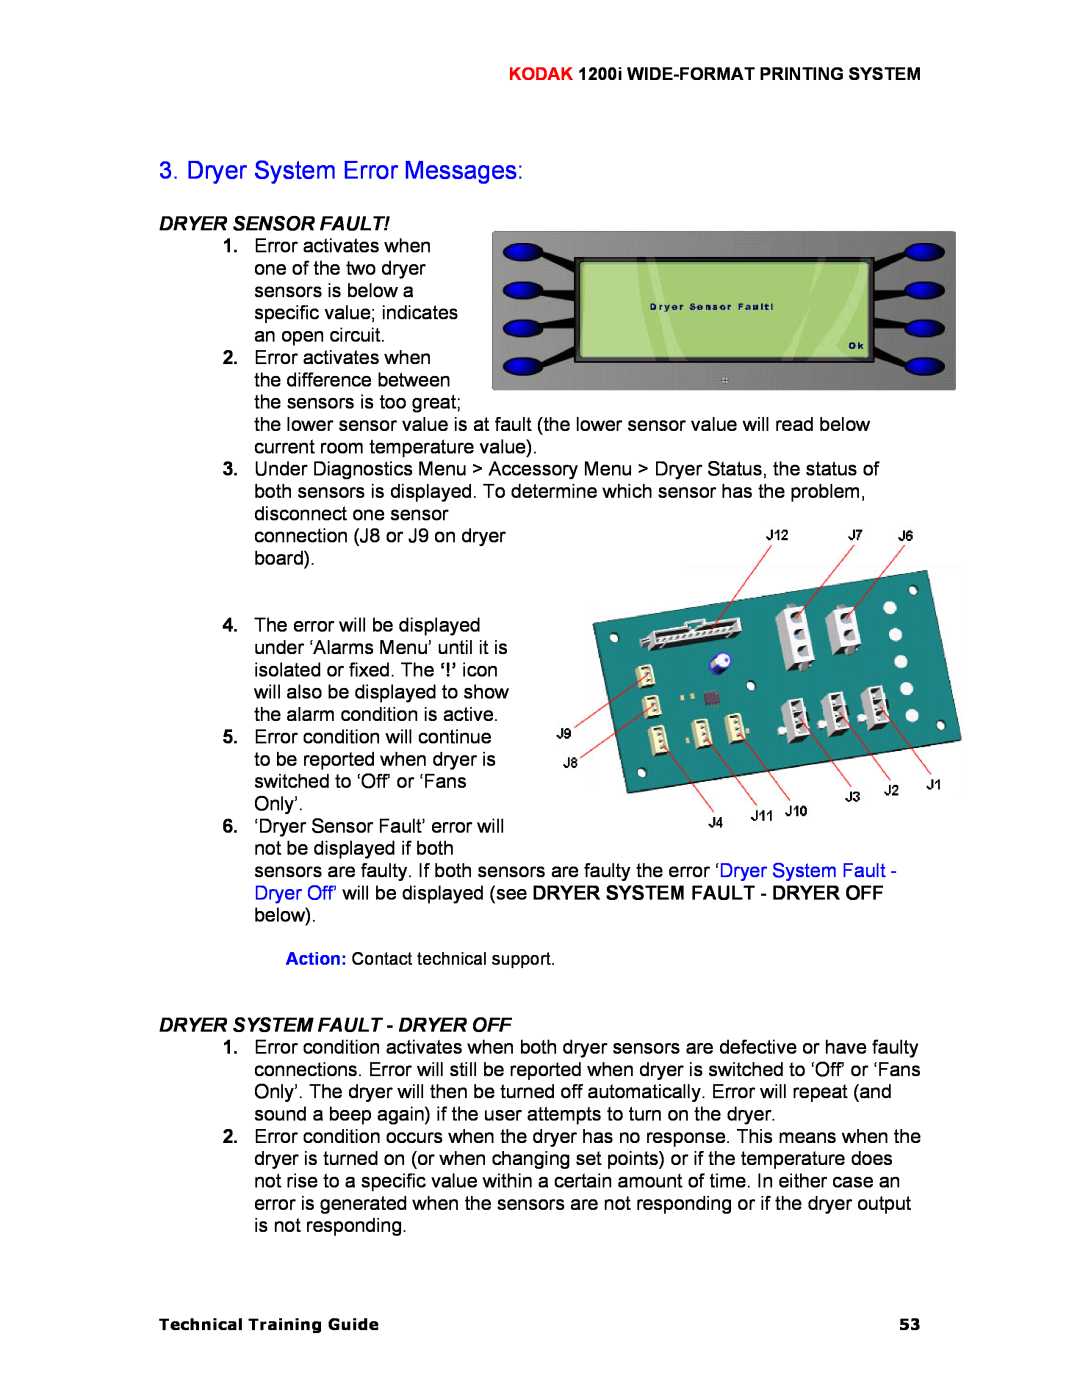 Kodak 1200I manual Dryer System Error Messages, Dryer Sensor Fault, Dryer System Fault - Dryer Off 